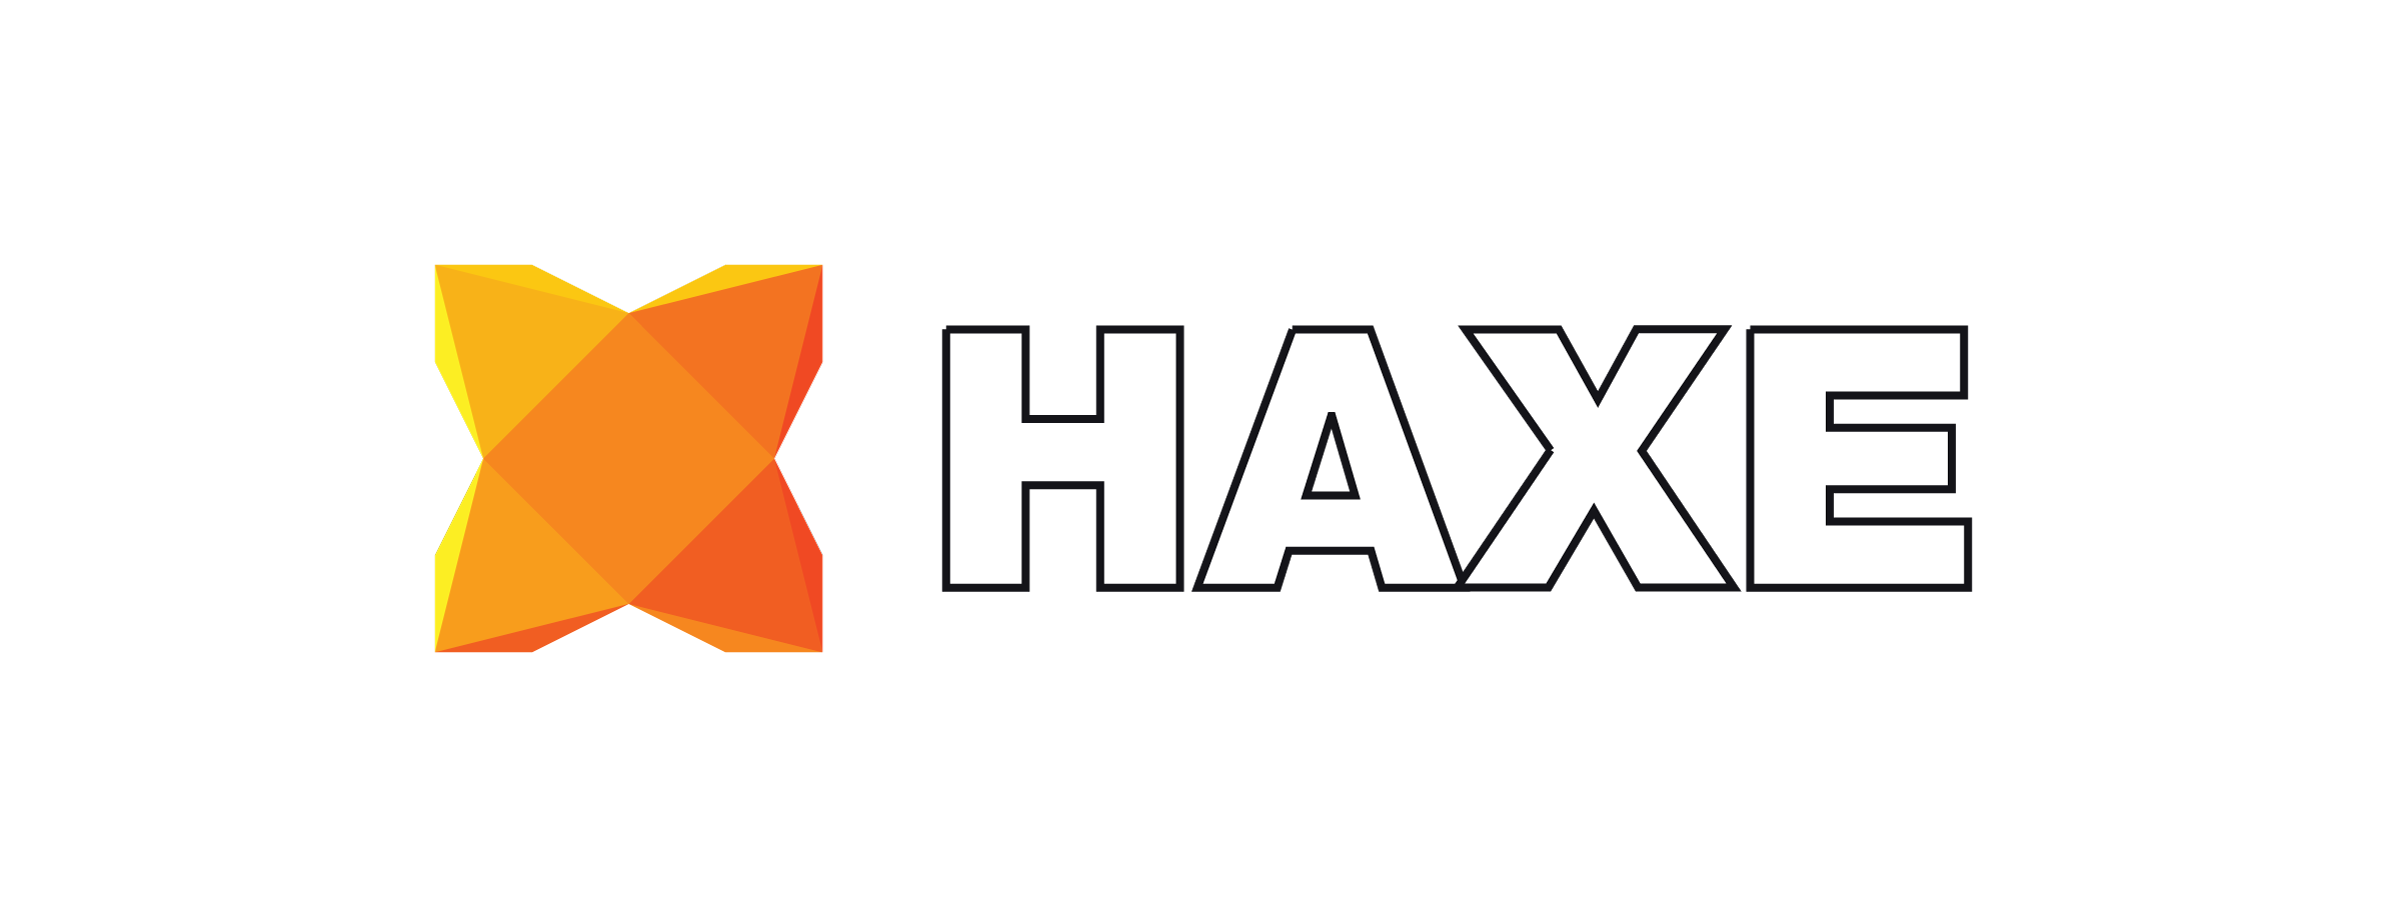 Haxe Foundation